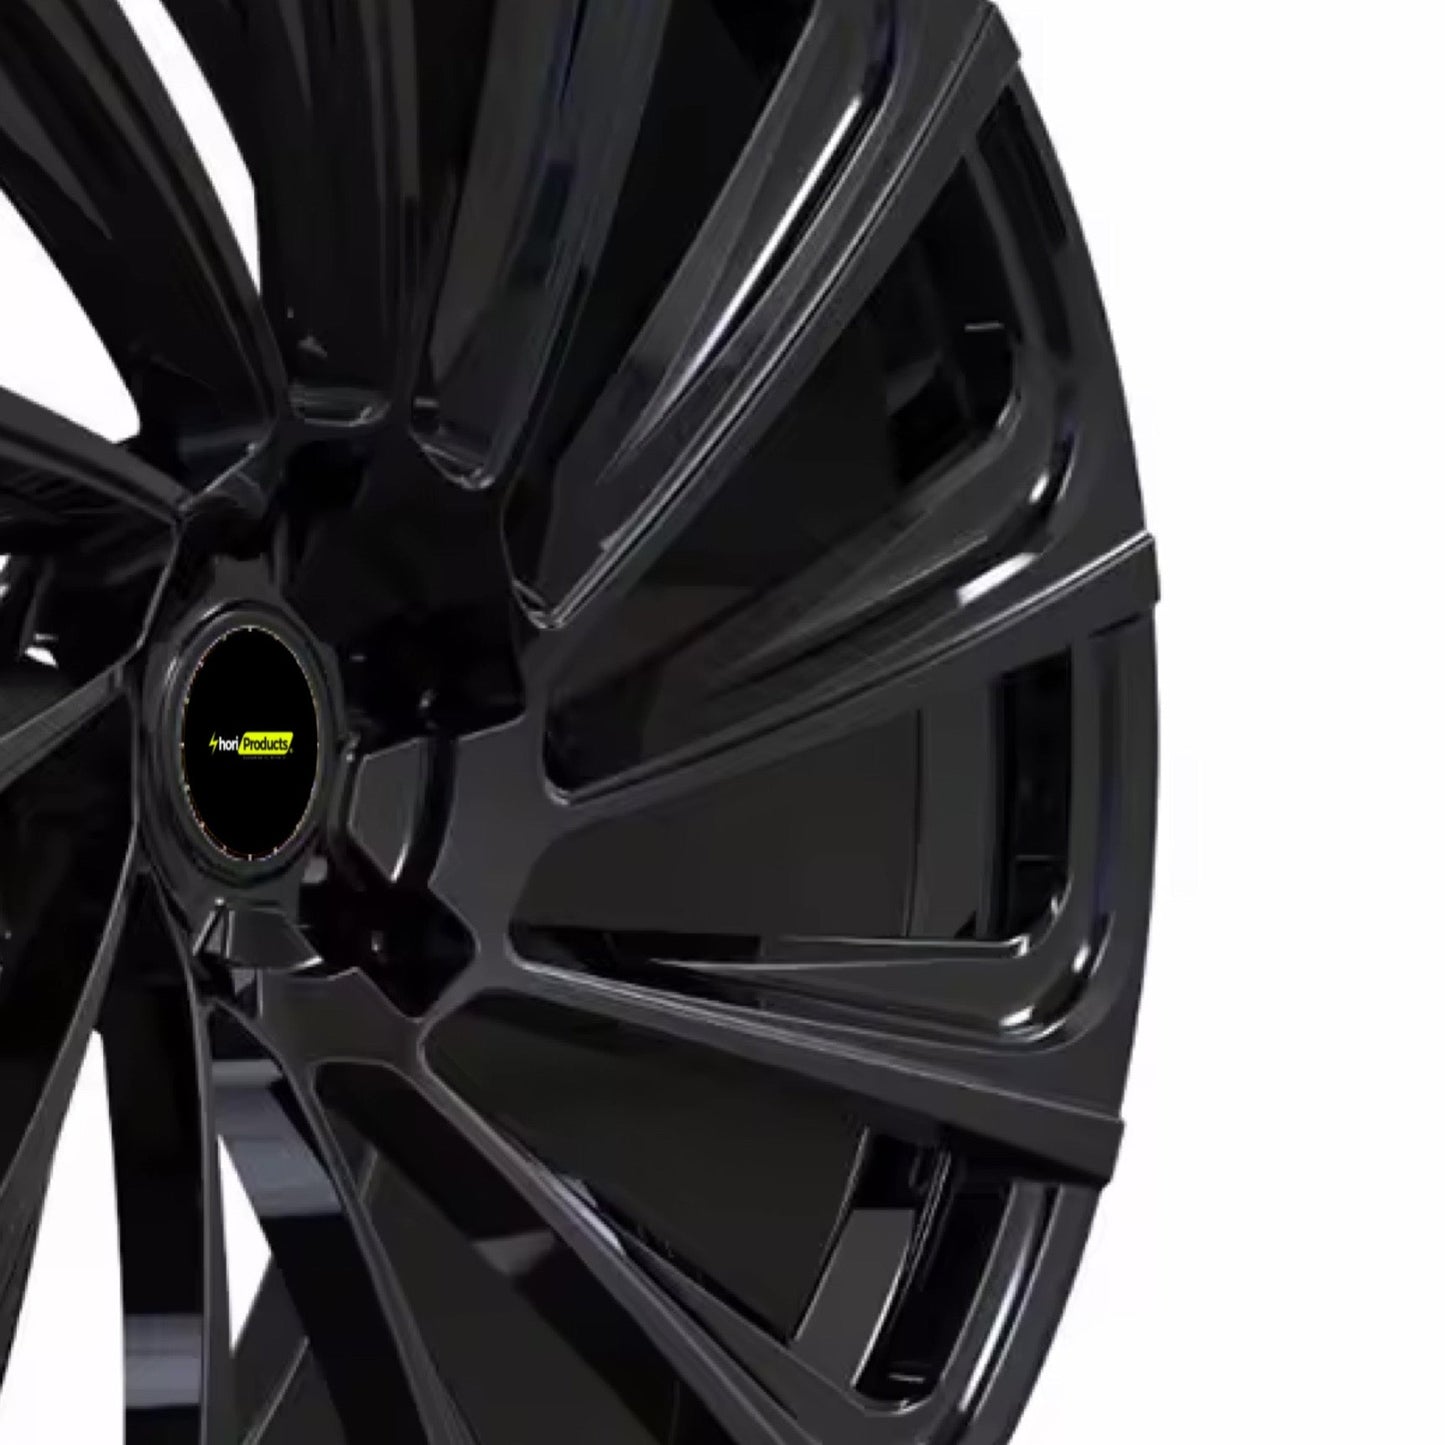 AeroGlide TitanX - Forged Aluminum Wheels for Model 3 5X114.3 (Set of 4)